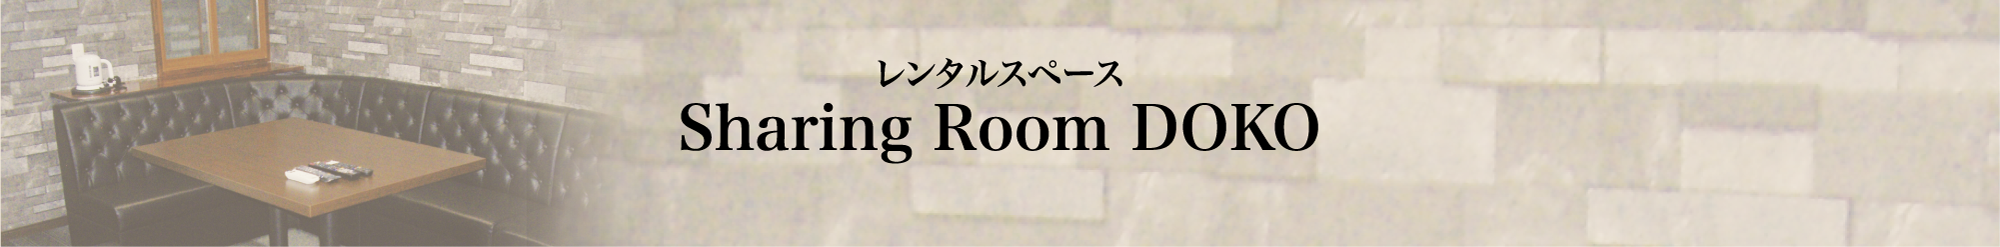 Sharing room DOKOトップイメージ